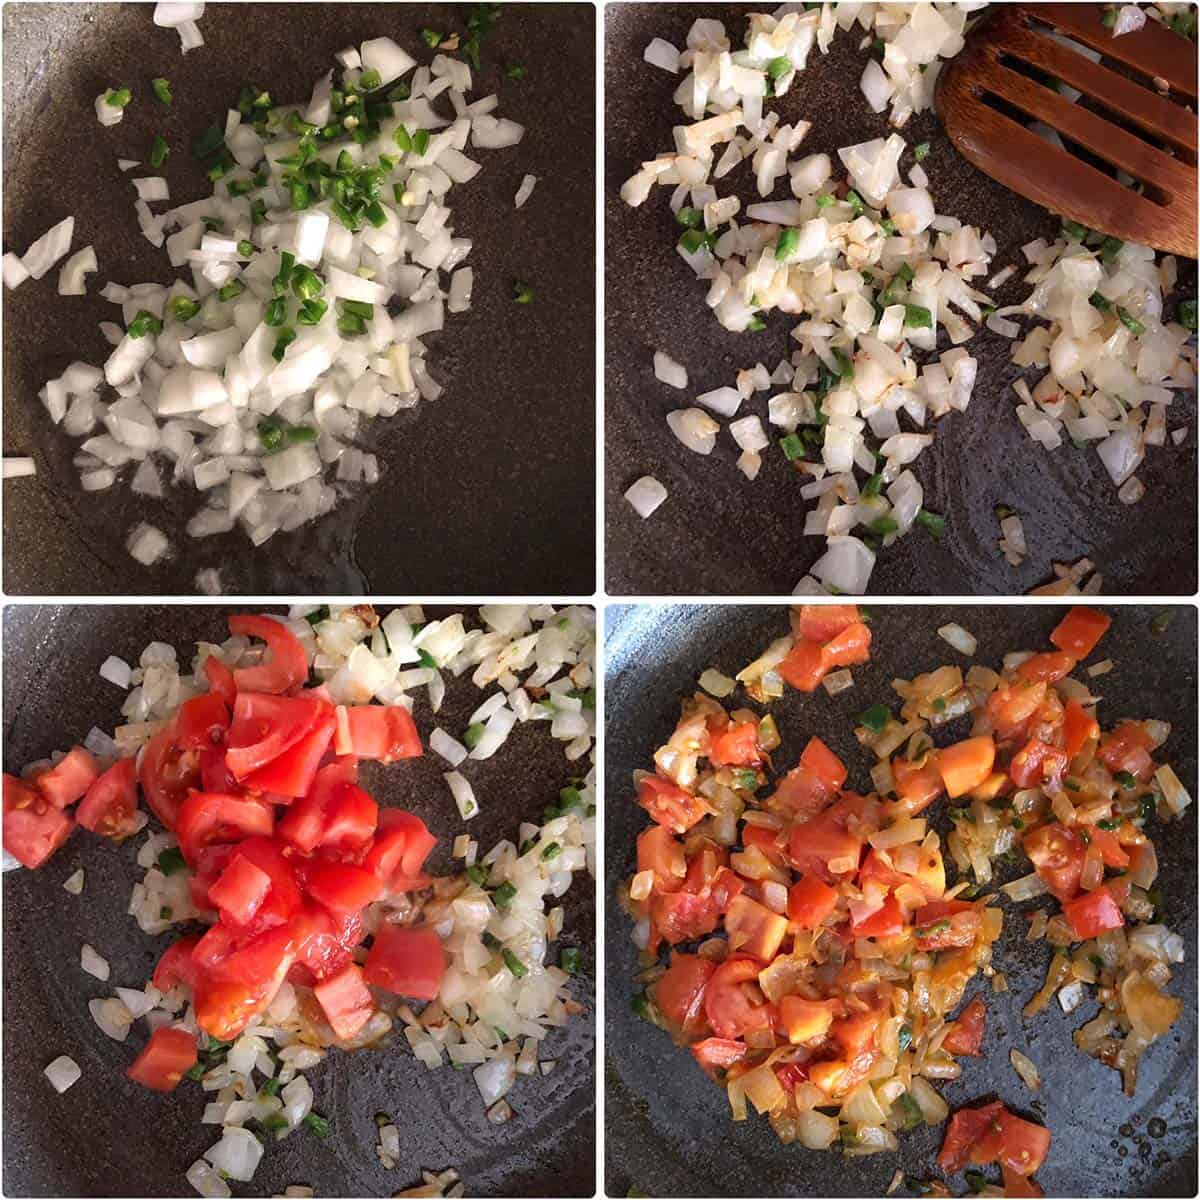 Cooking veggies in a nonstick pan